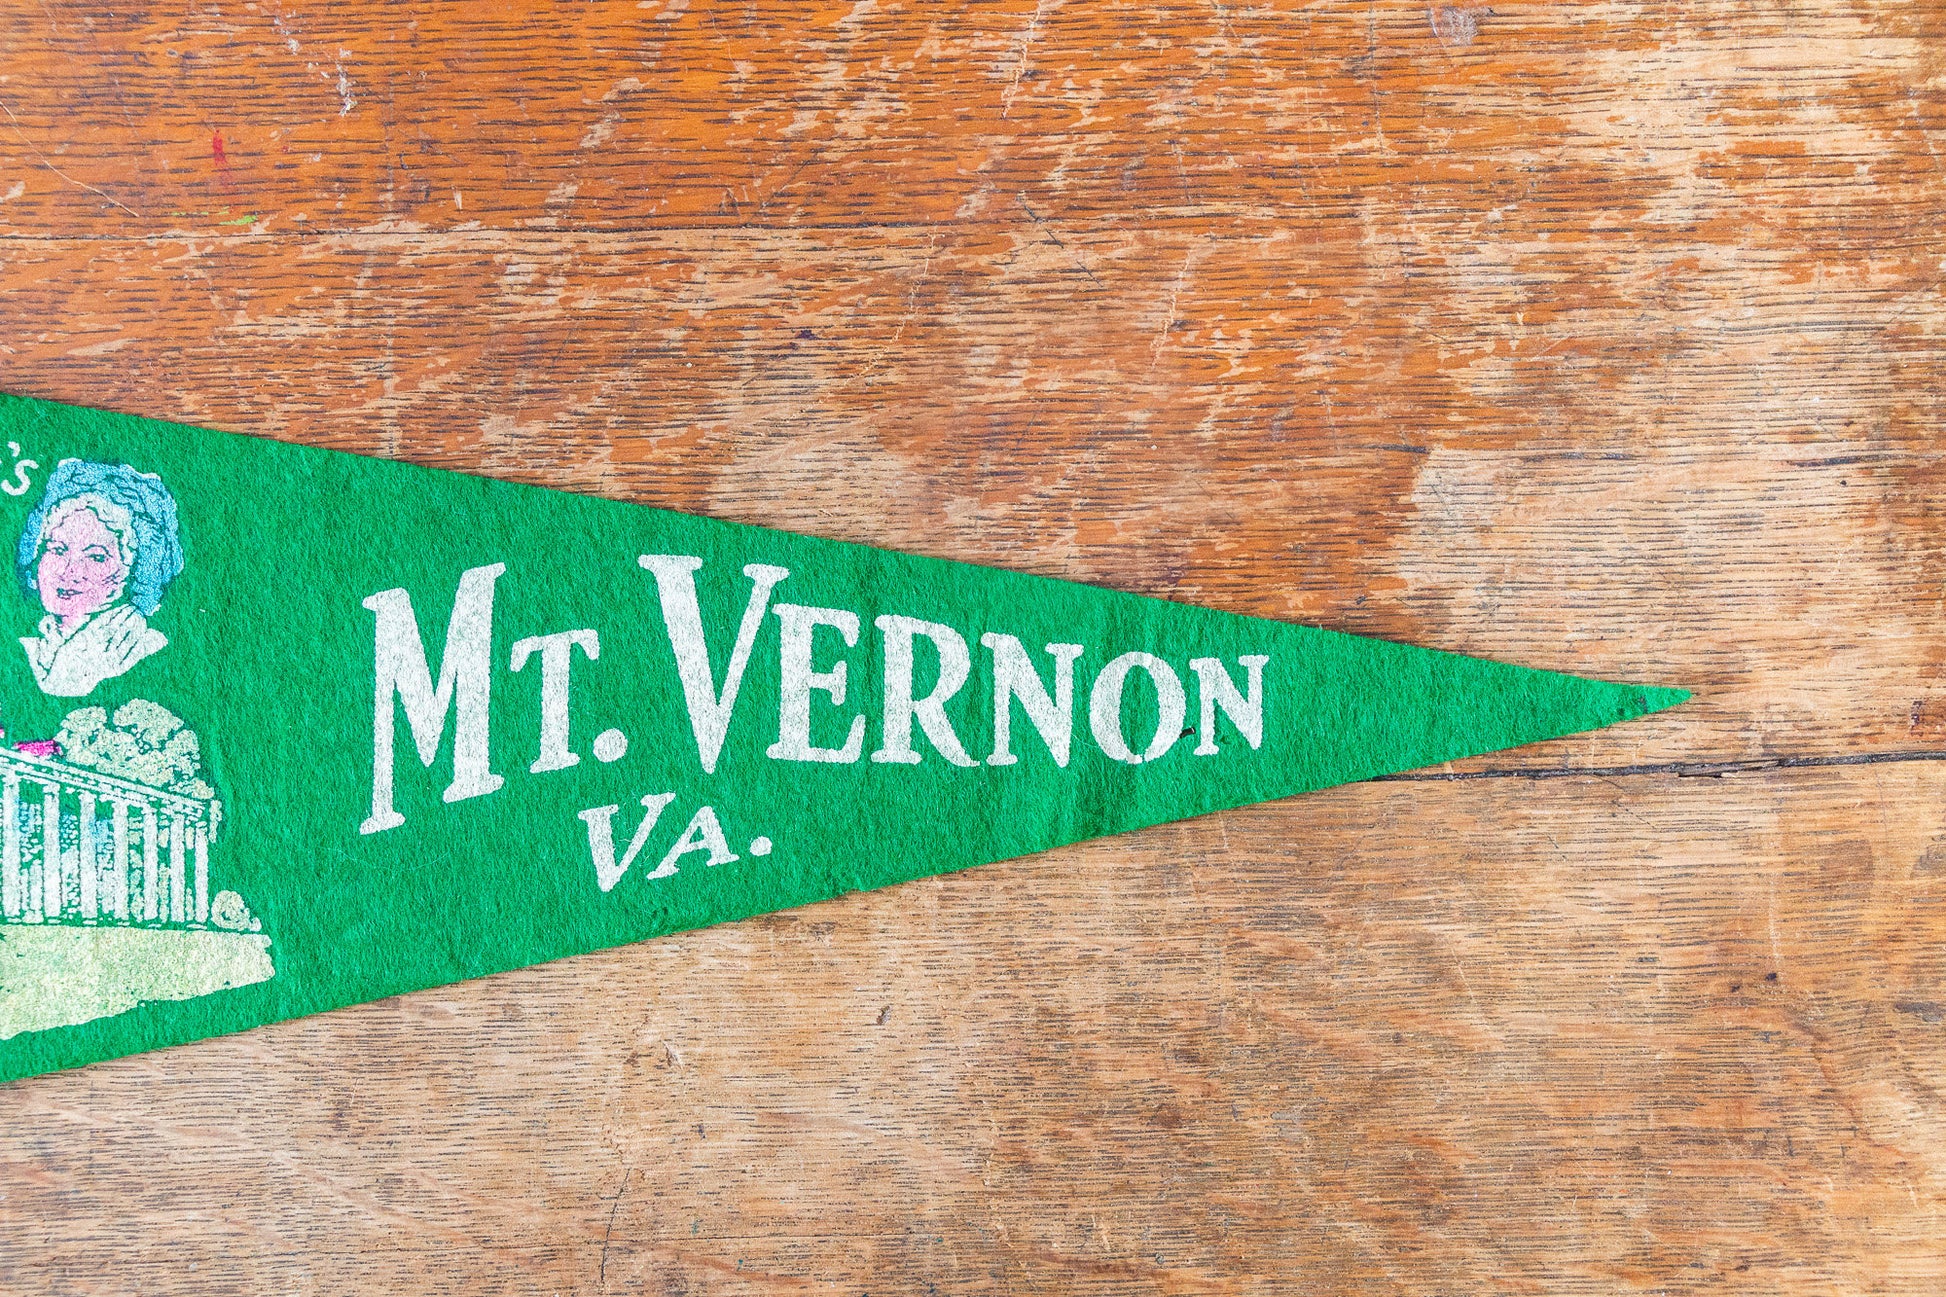 Mt. Vernon Virginia Felt Pennant Vintage Green Wall Decor - Eagle's Eye Finds